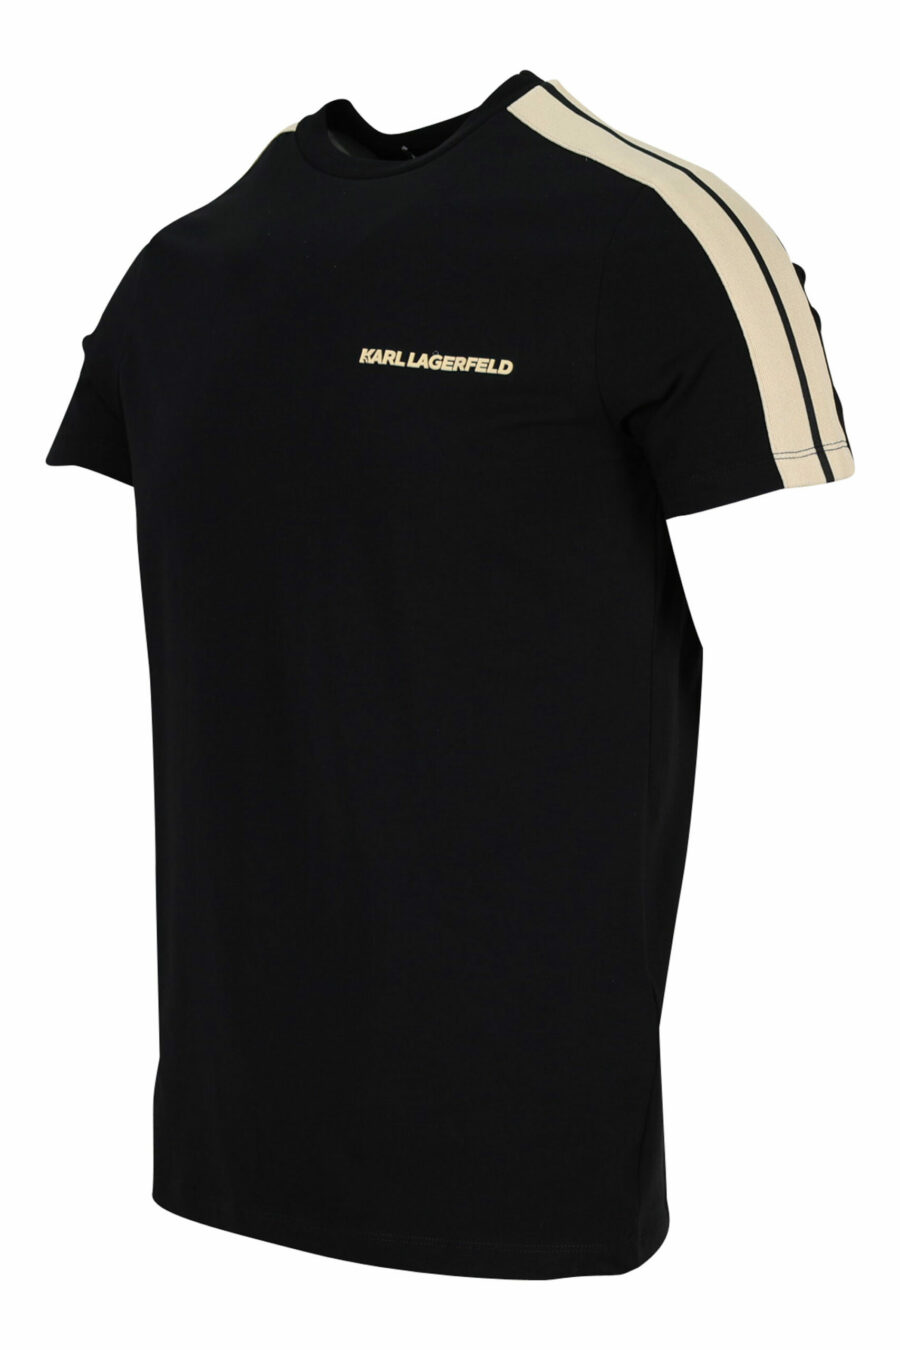 Camiseta negra con minilogo y franjas beige laterales - 4062226401746 1 scaled